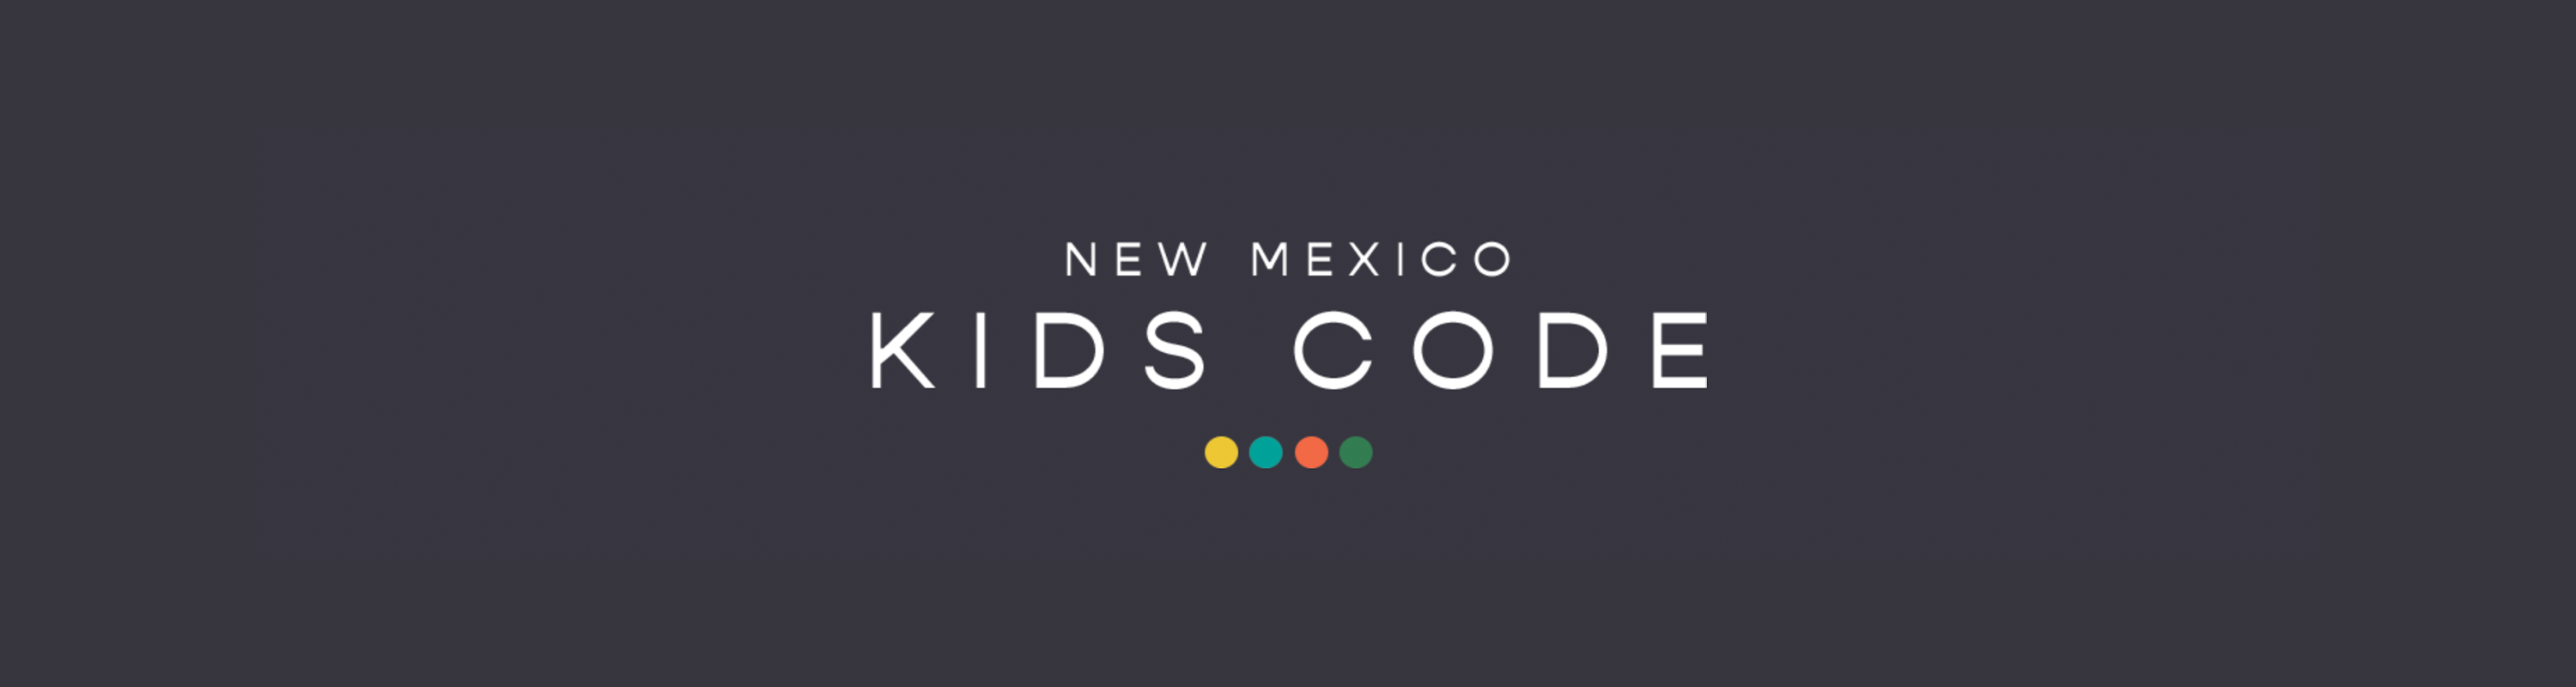 New Mexico Kids Code - Accountable Tech